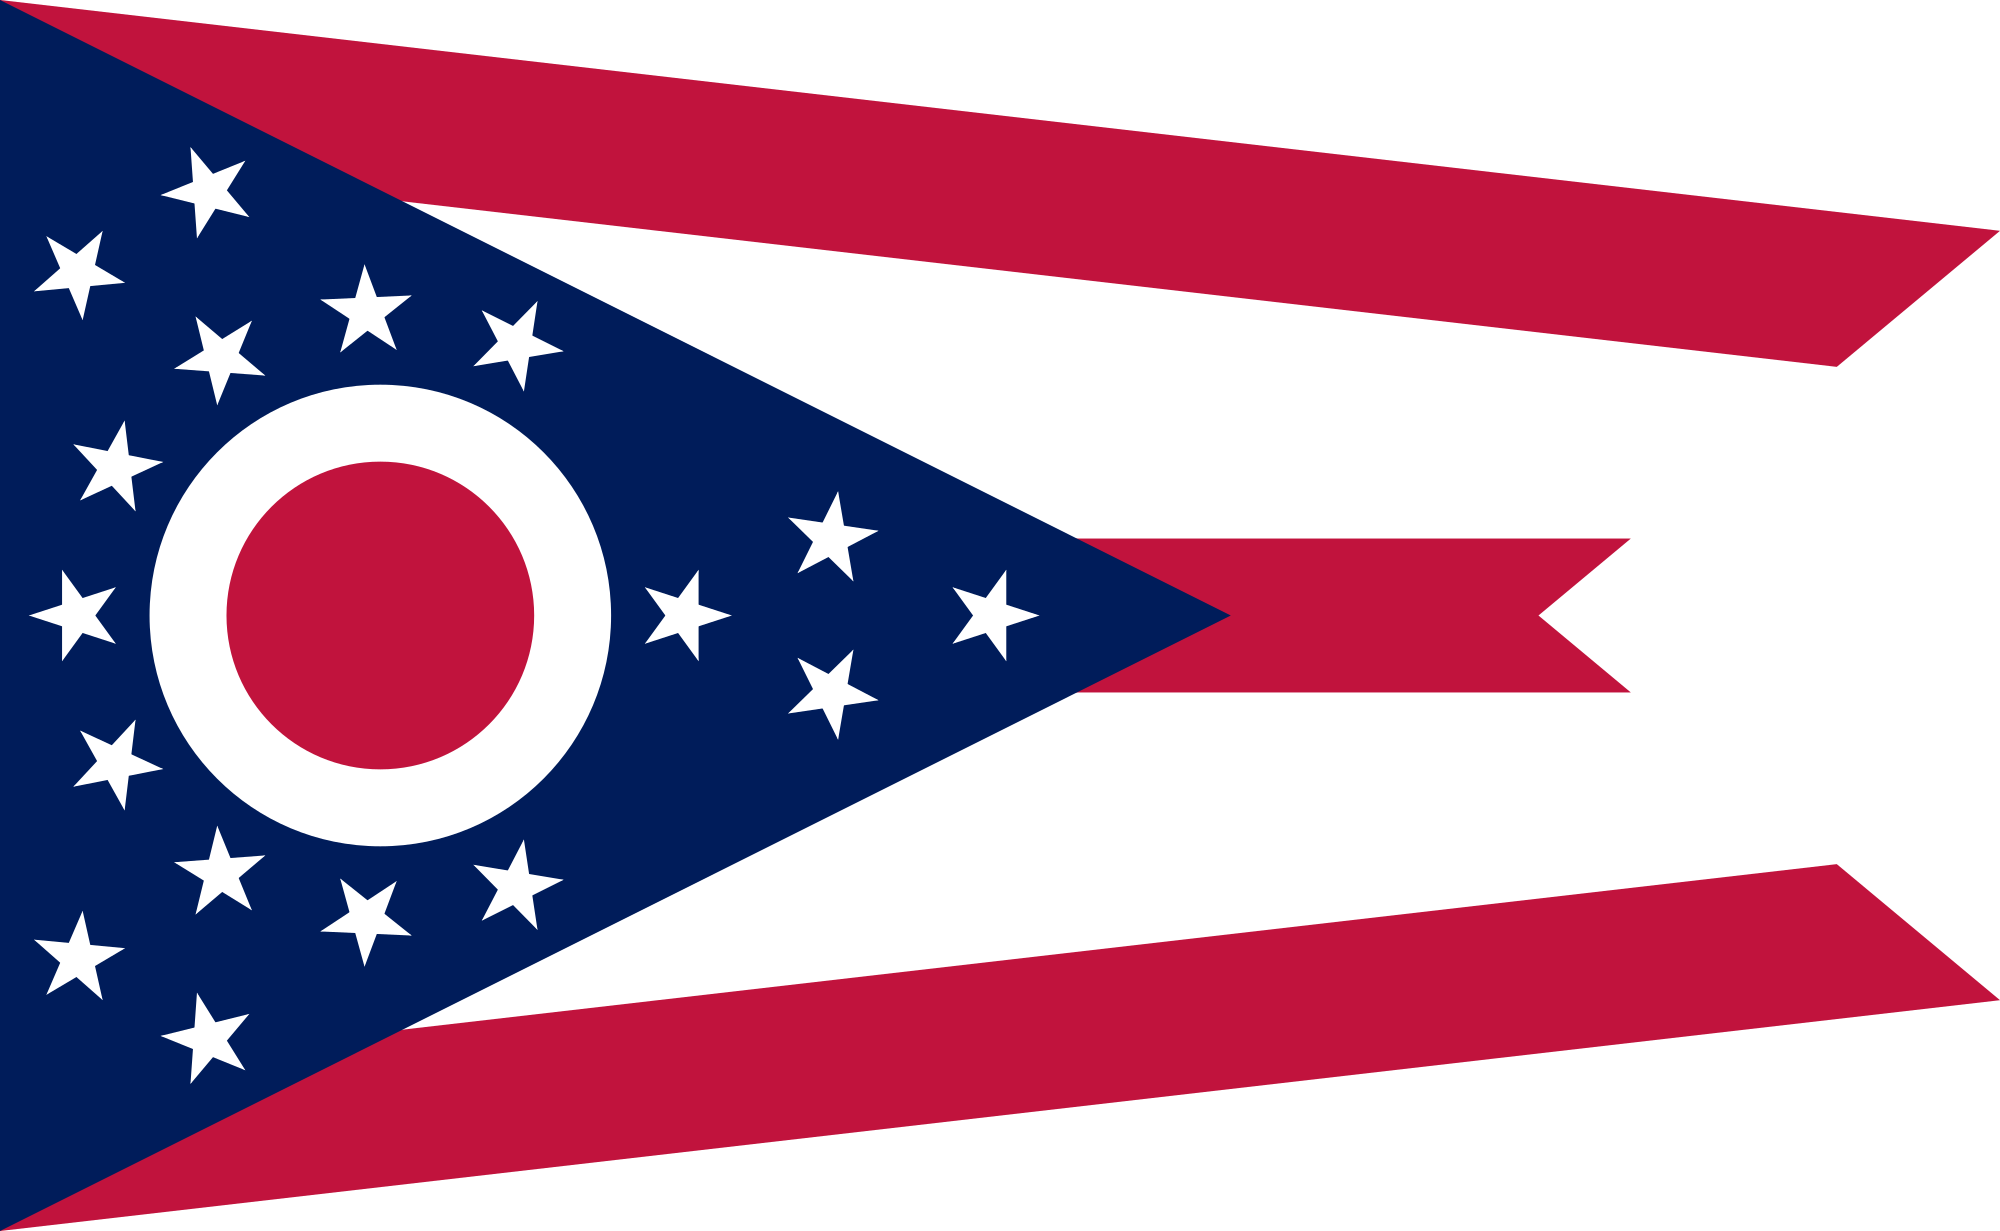 The Ohio state flag